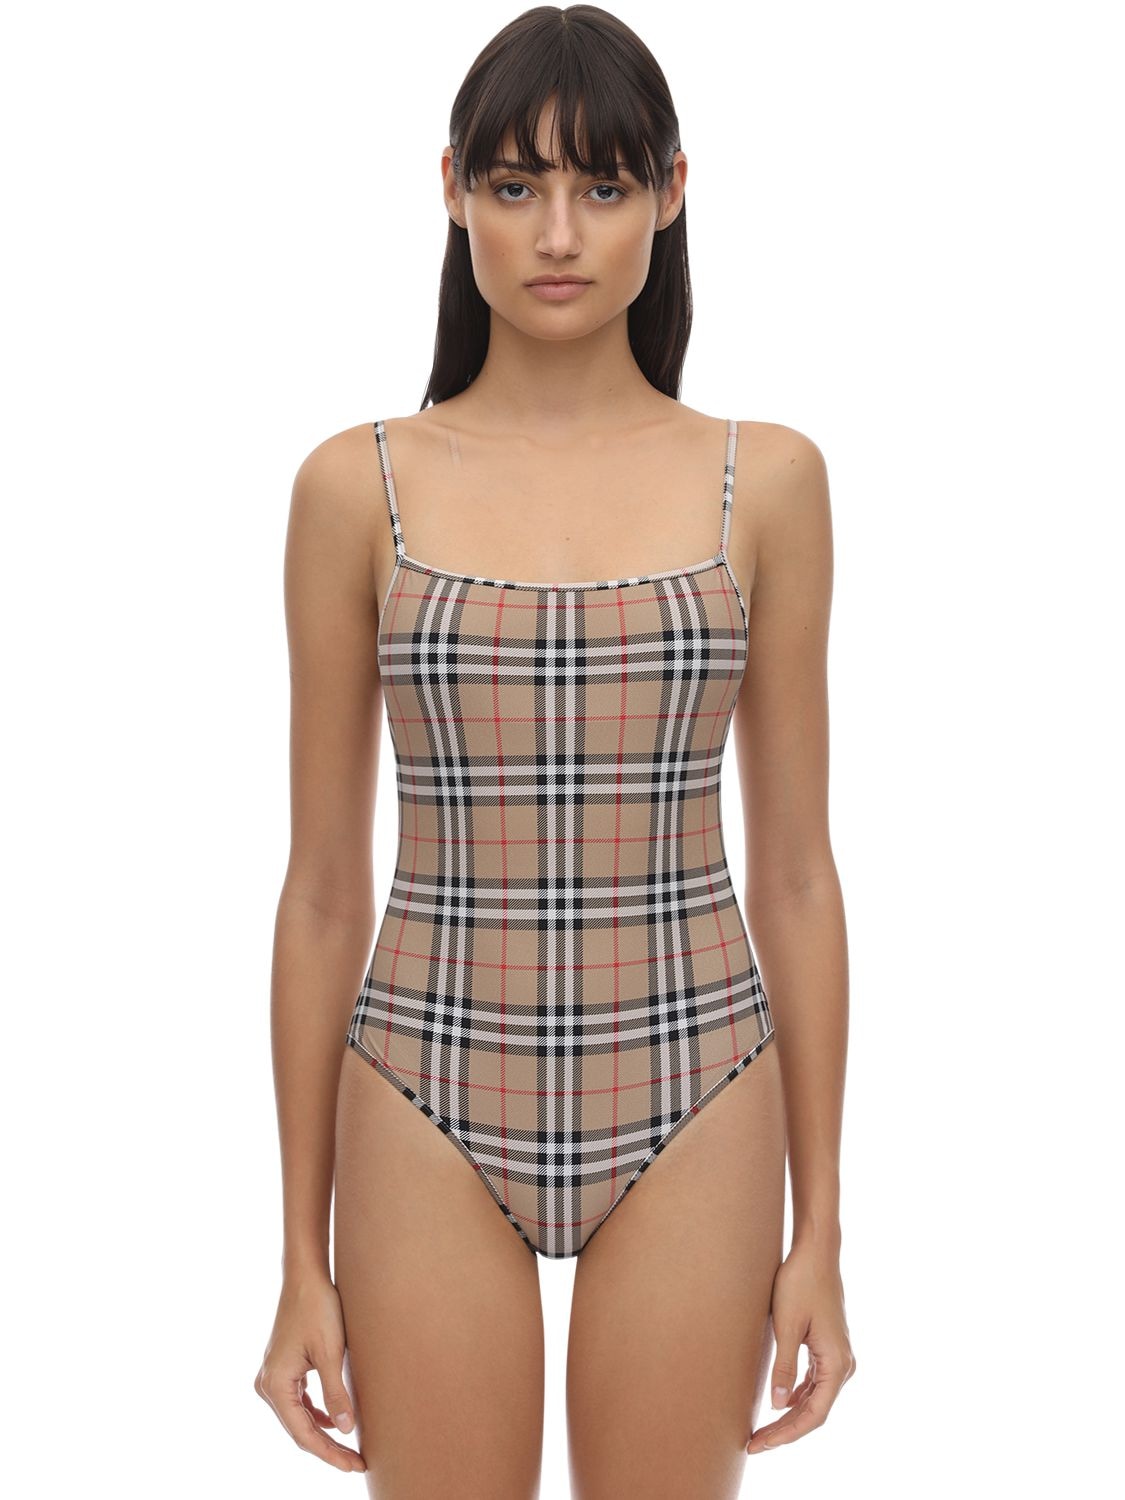 burberry print bathing suit